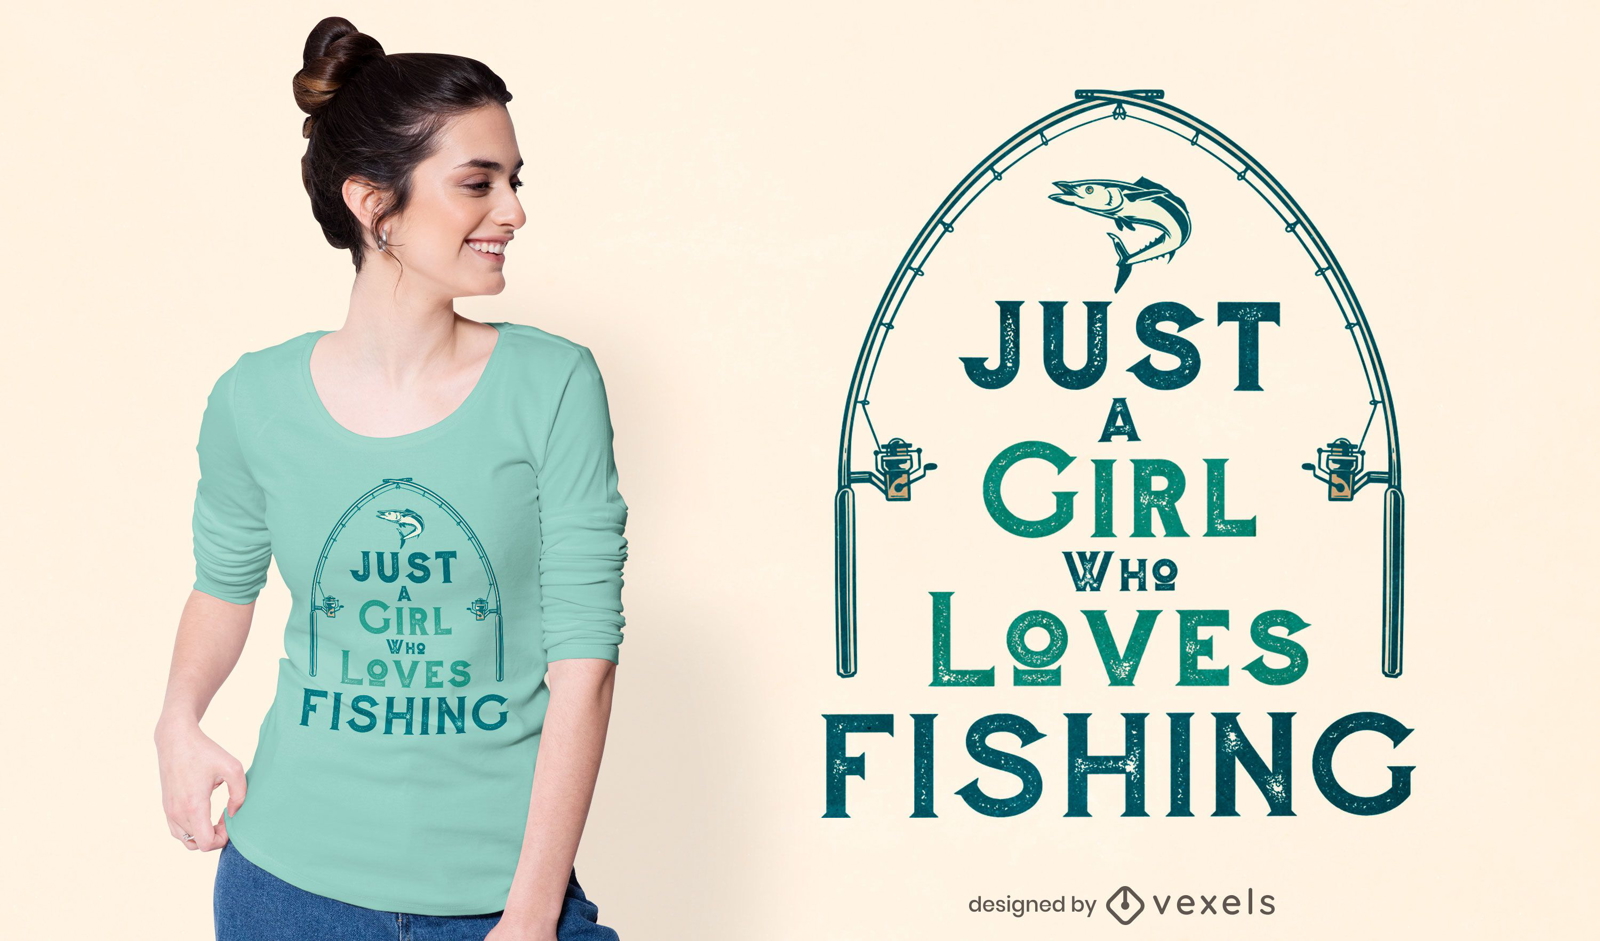 Fishing lover t-shirt design